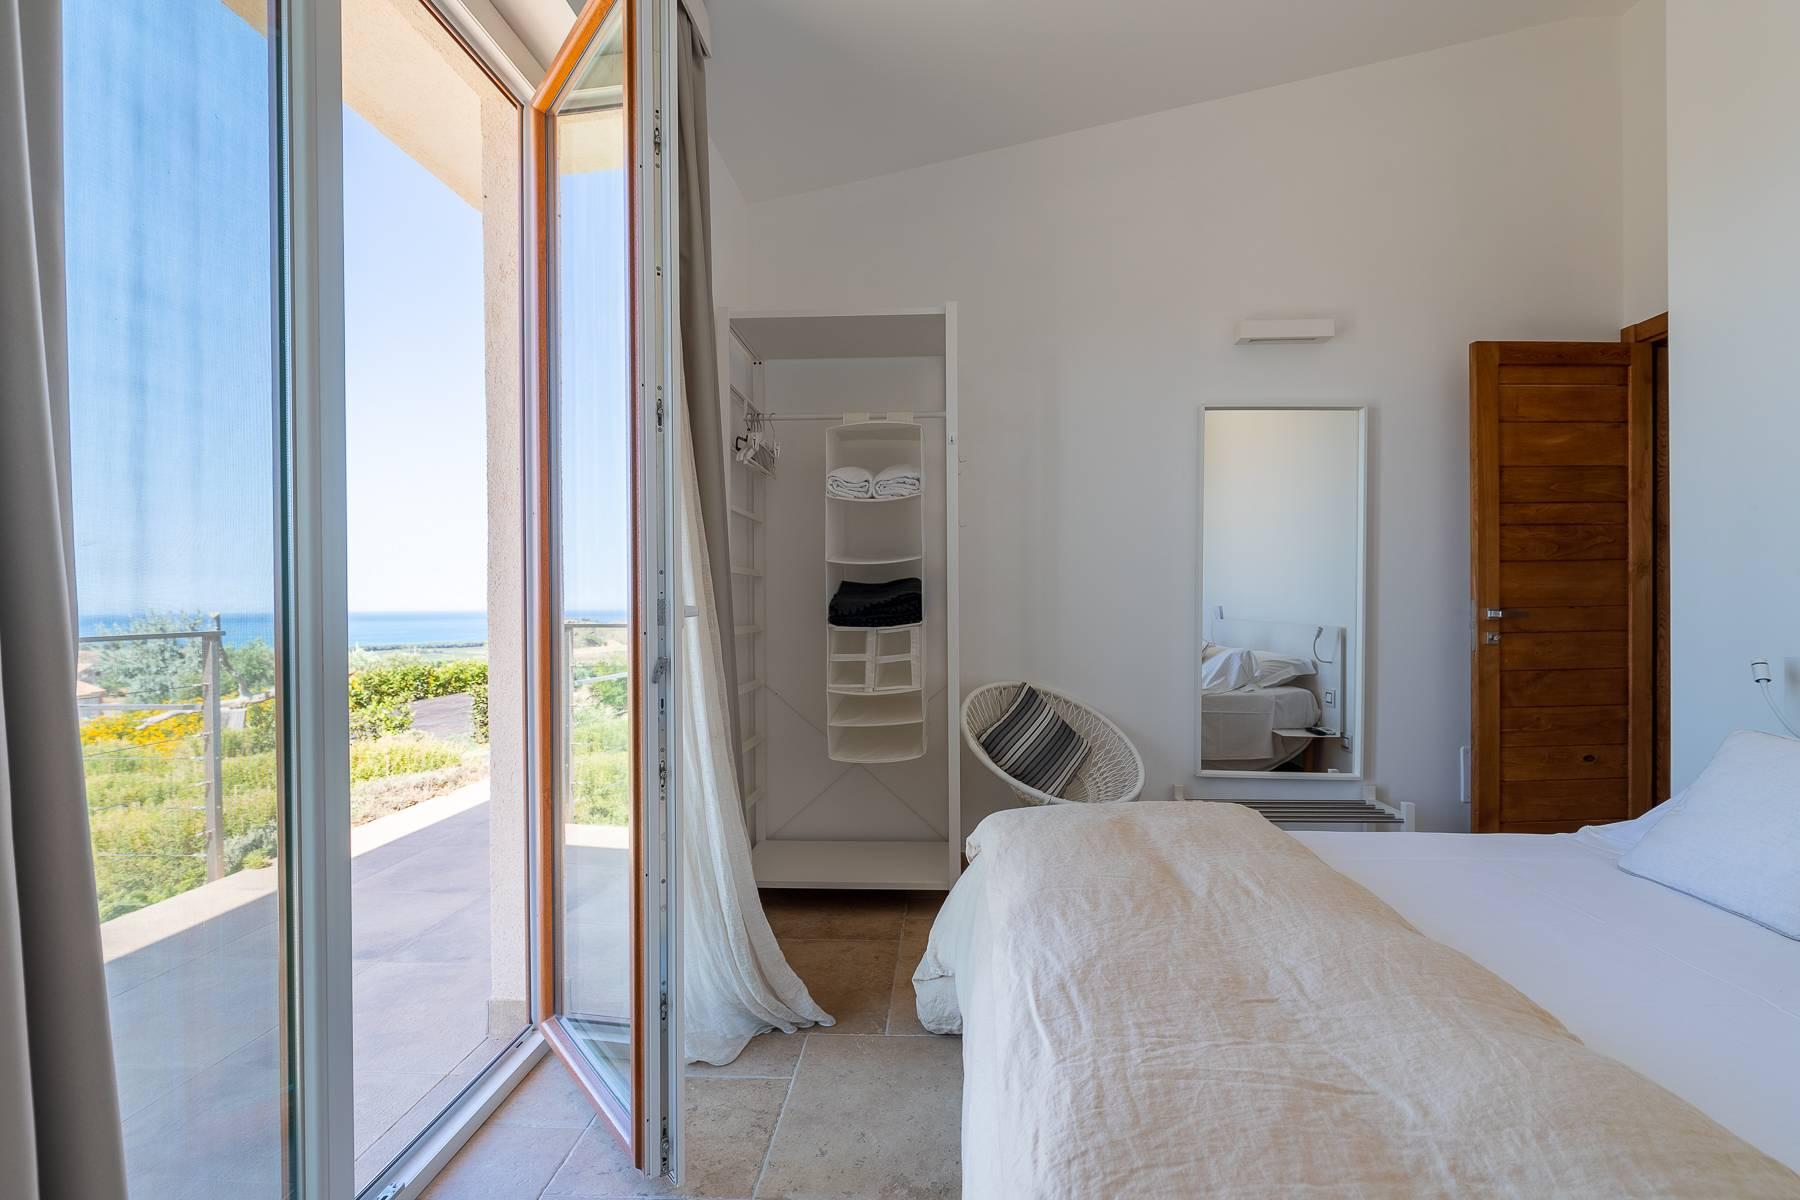 Exclusive villa with stunning views on the Mediterranean sea - 24